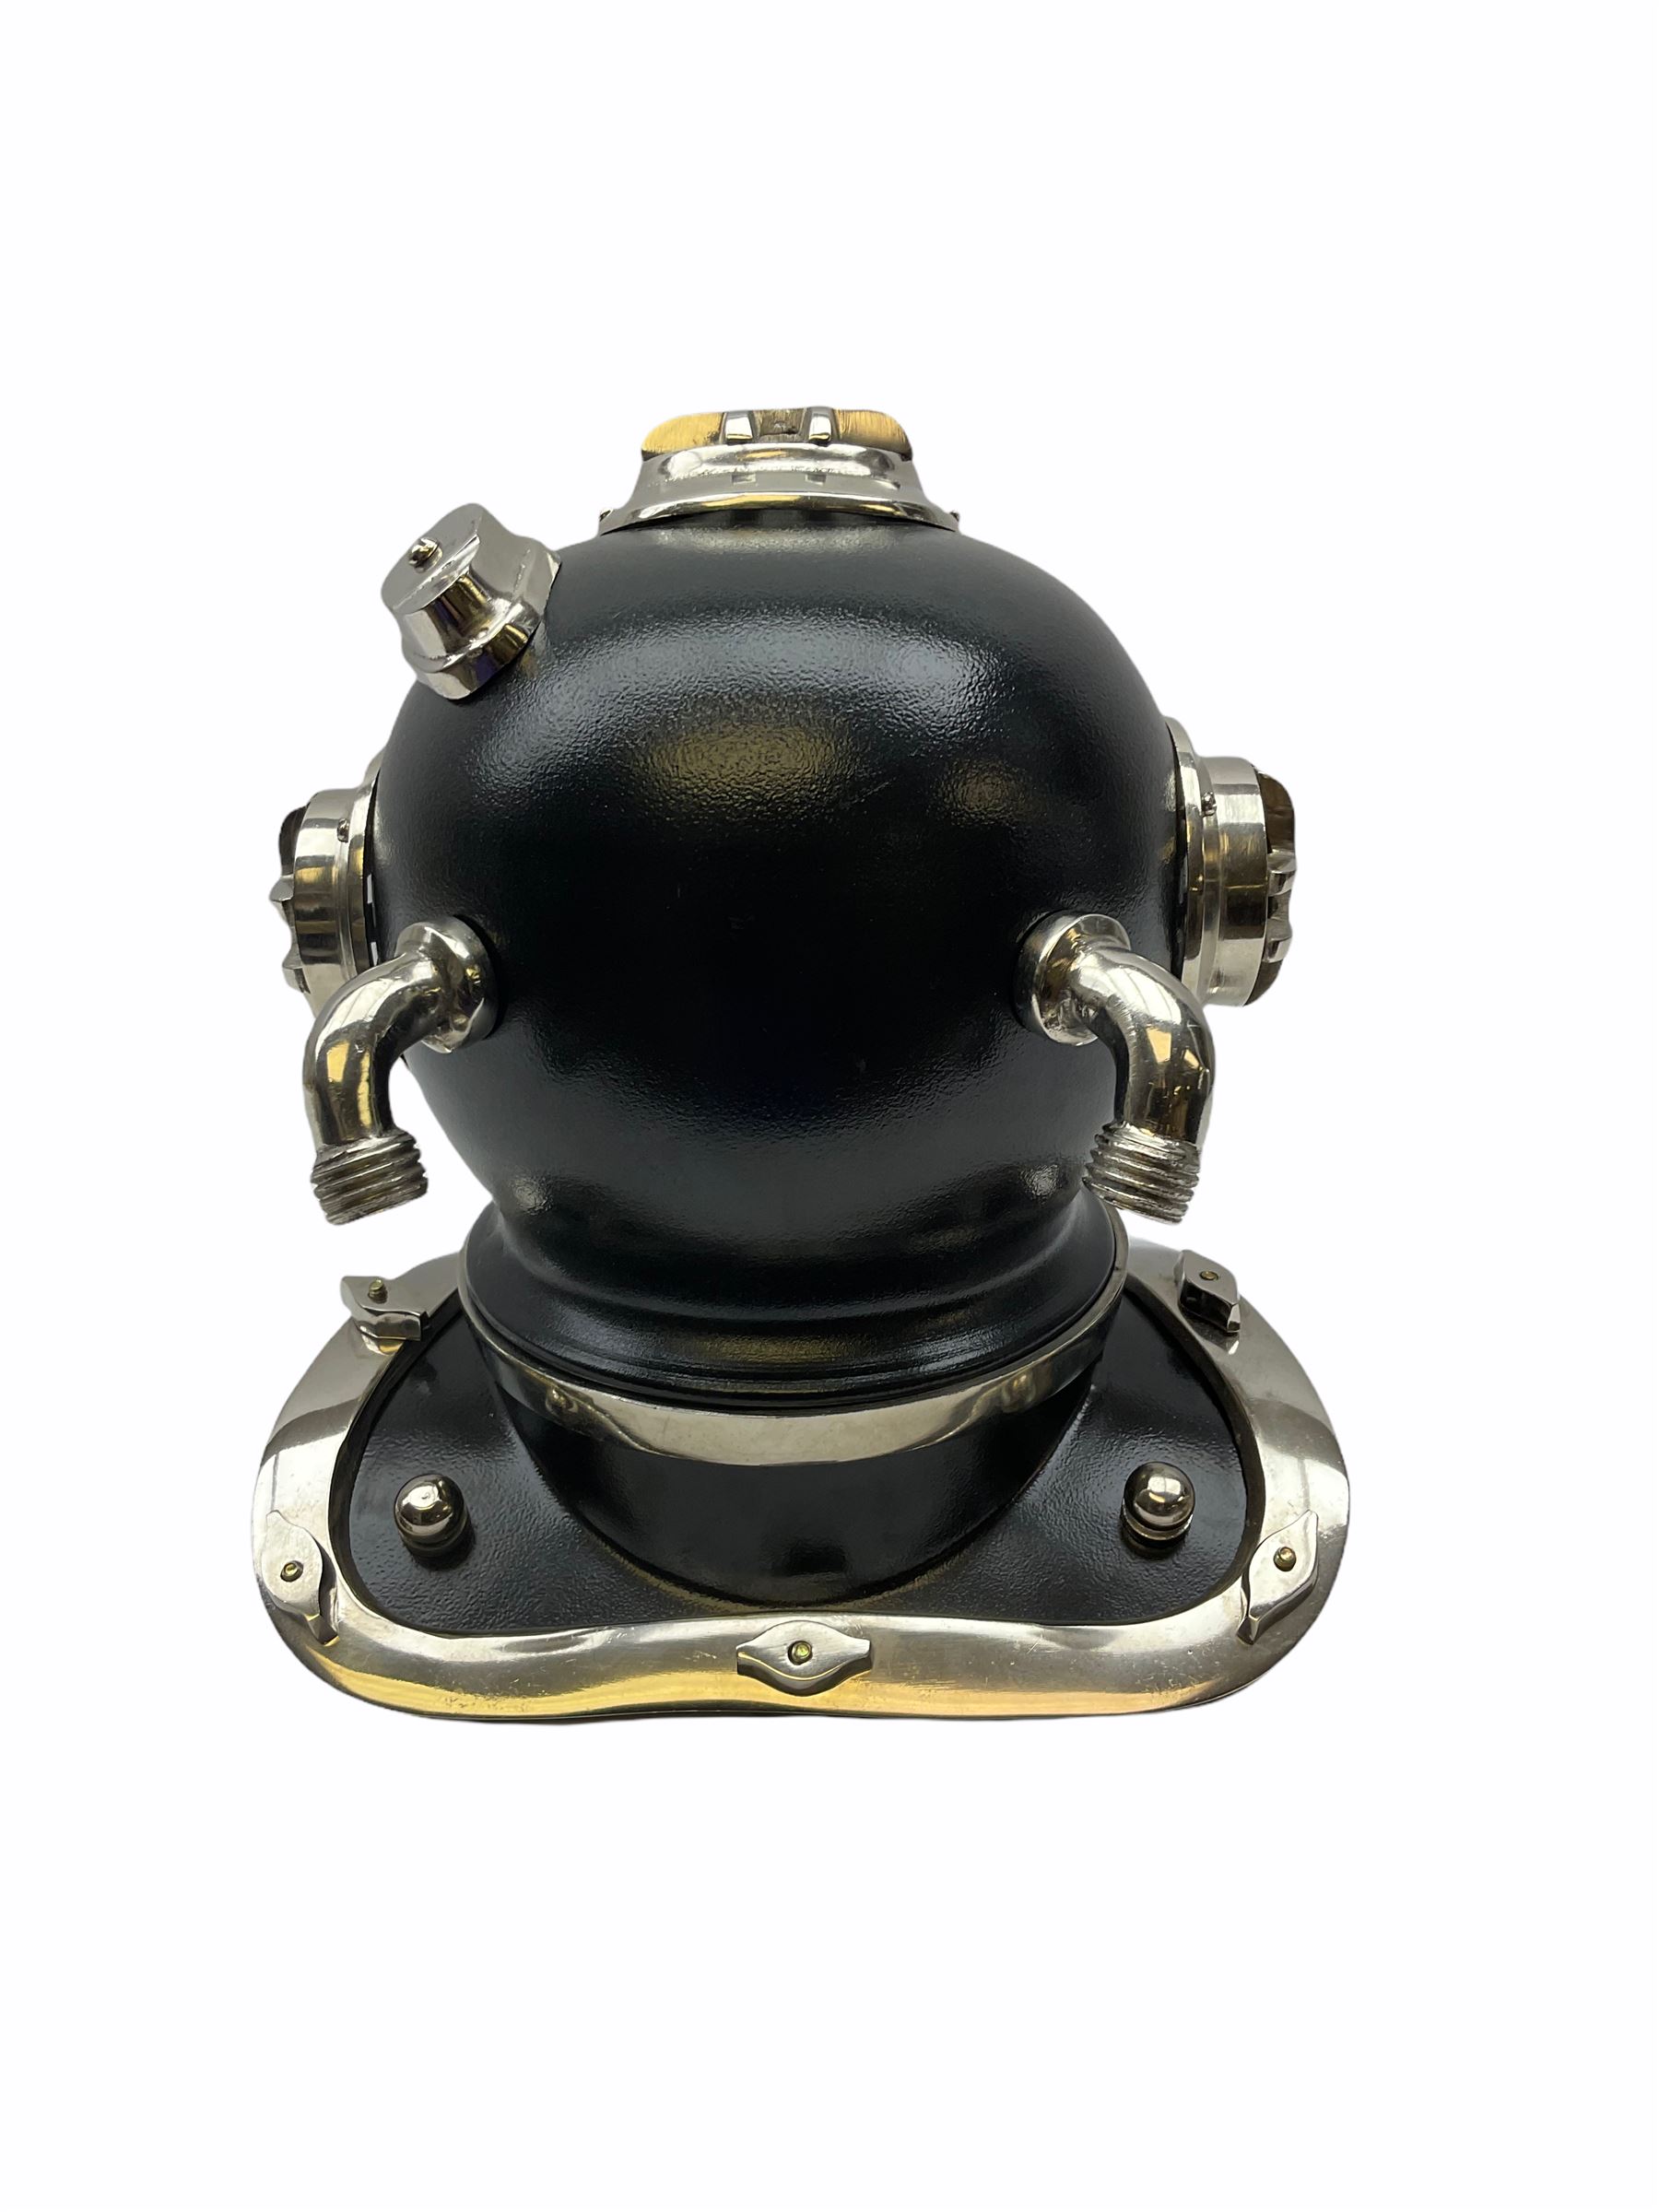 Decorative scuba diving helmet - Image 5 of 5